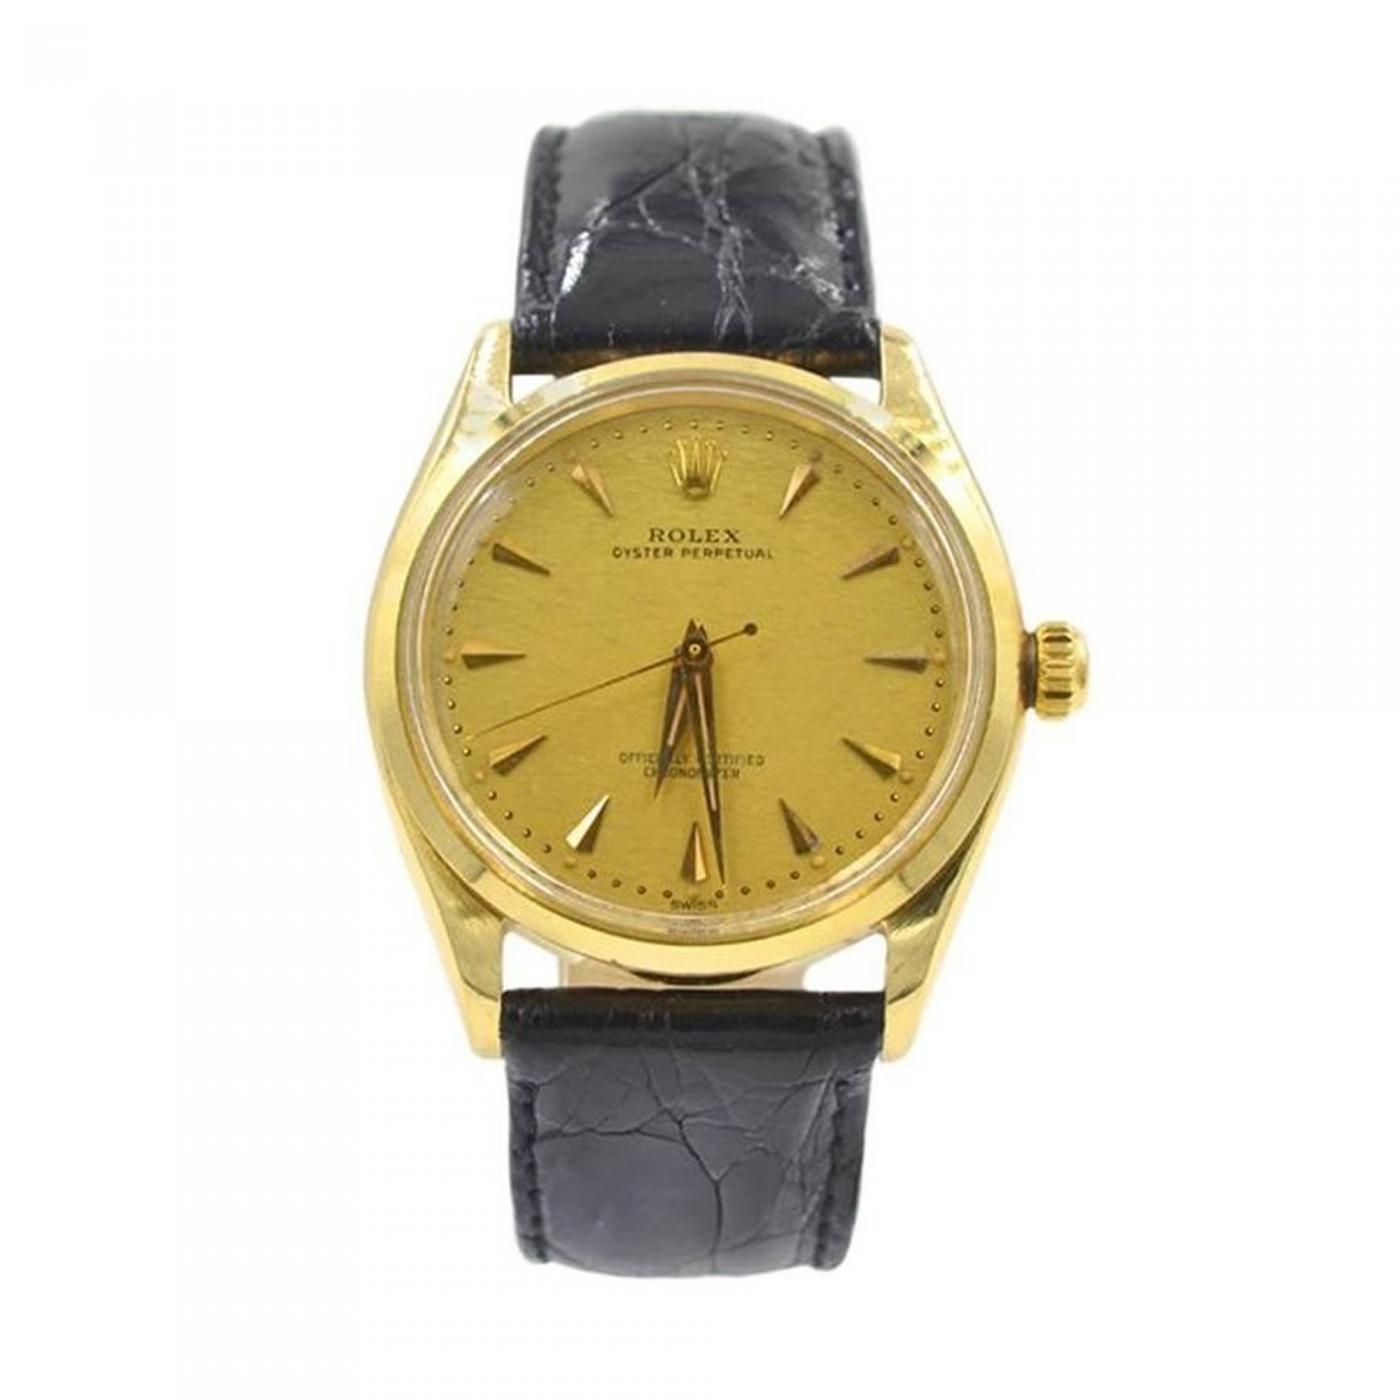 Rolex Watch Co. - ROLEX 14K GOLD OYSTER PERPETUAL WRISTWATCH, REF 6567, 1959